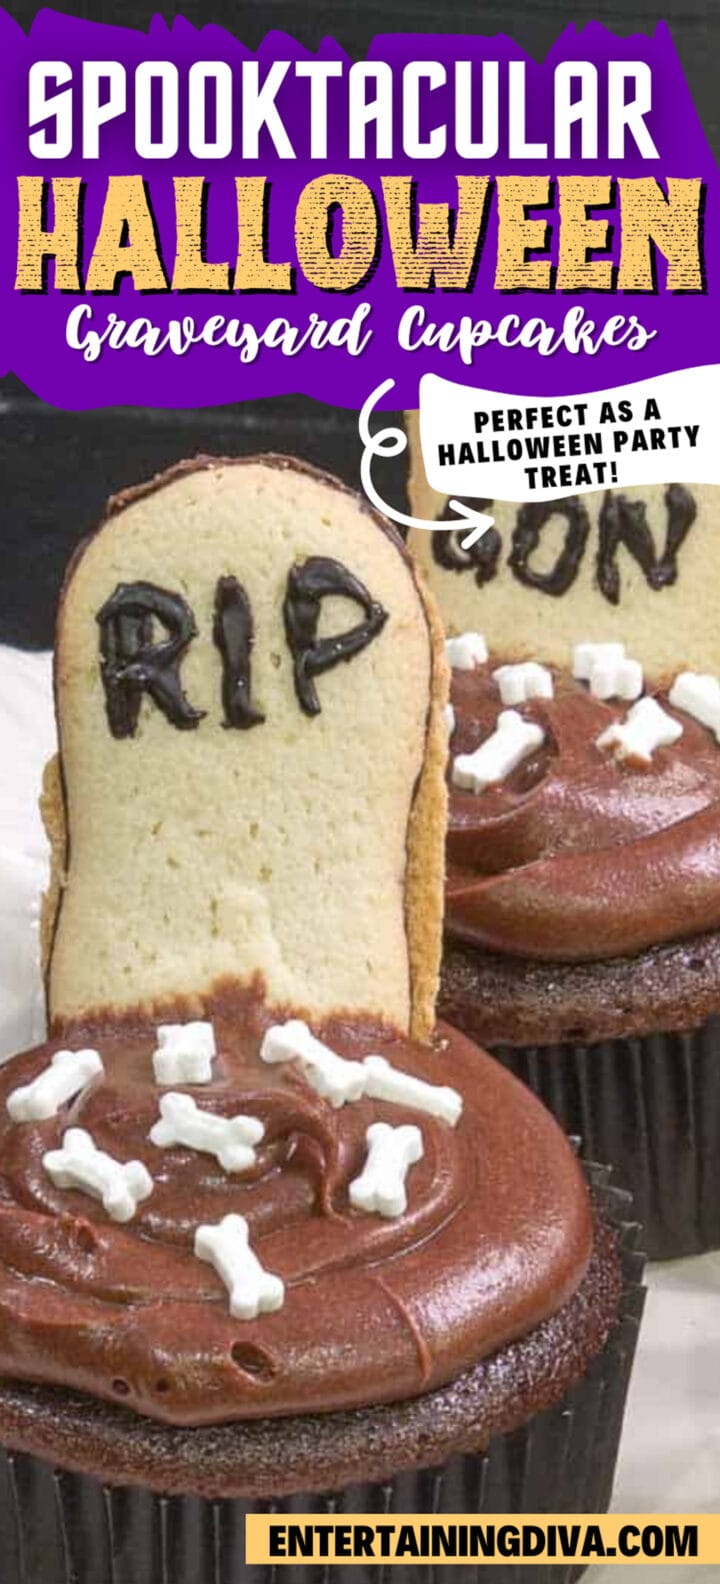 Easy Graveyard Halloween Cupcakes